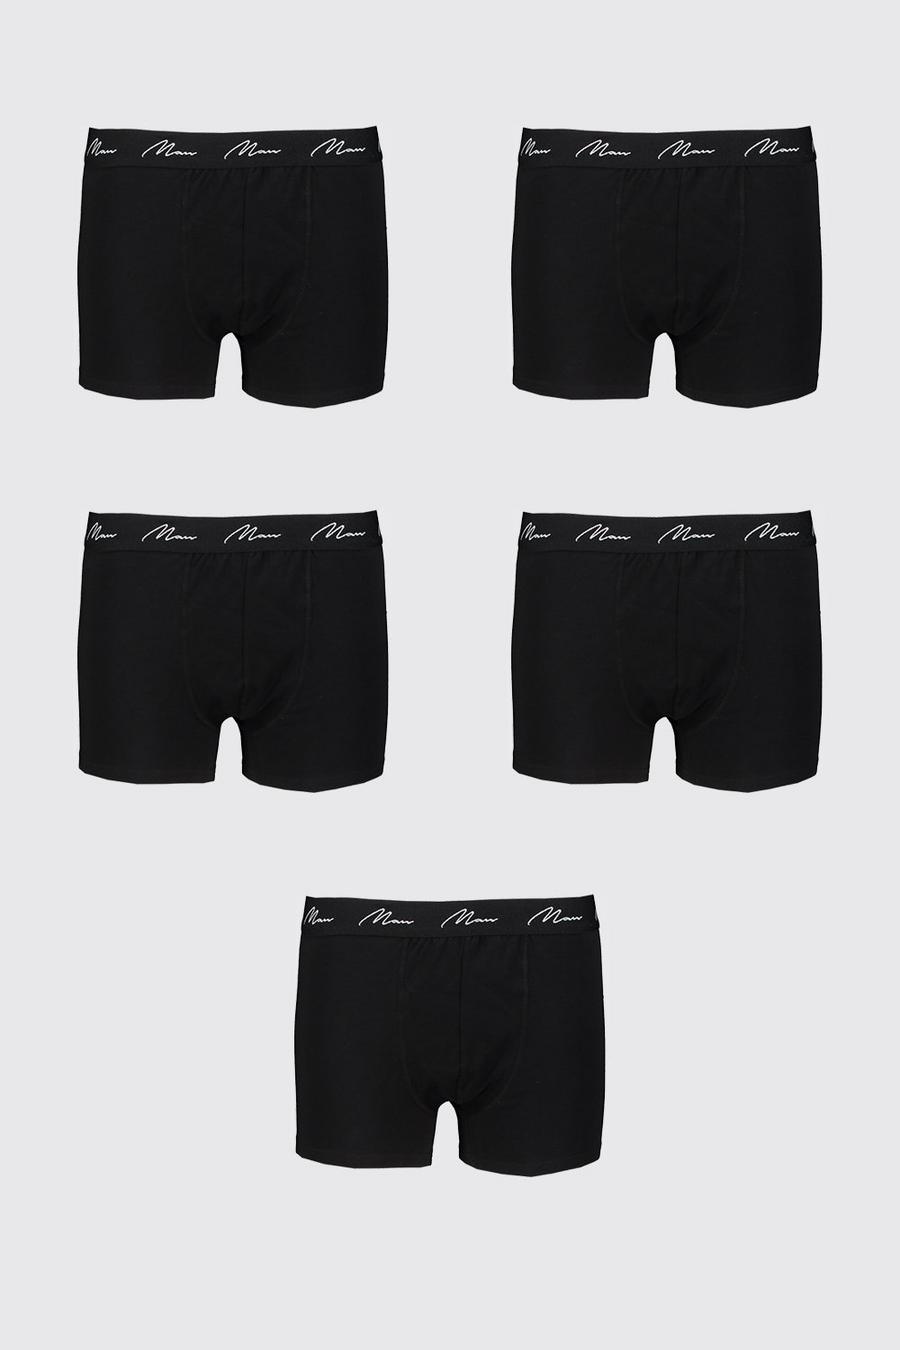 Plus 5er-Pack Boxershirts mit MAN-Schriftzug, Black